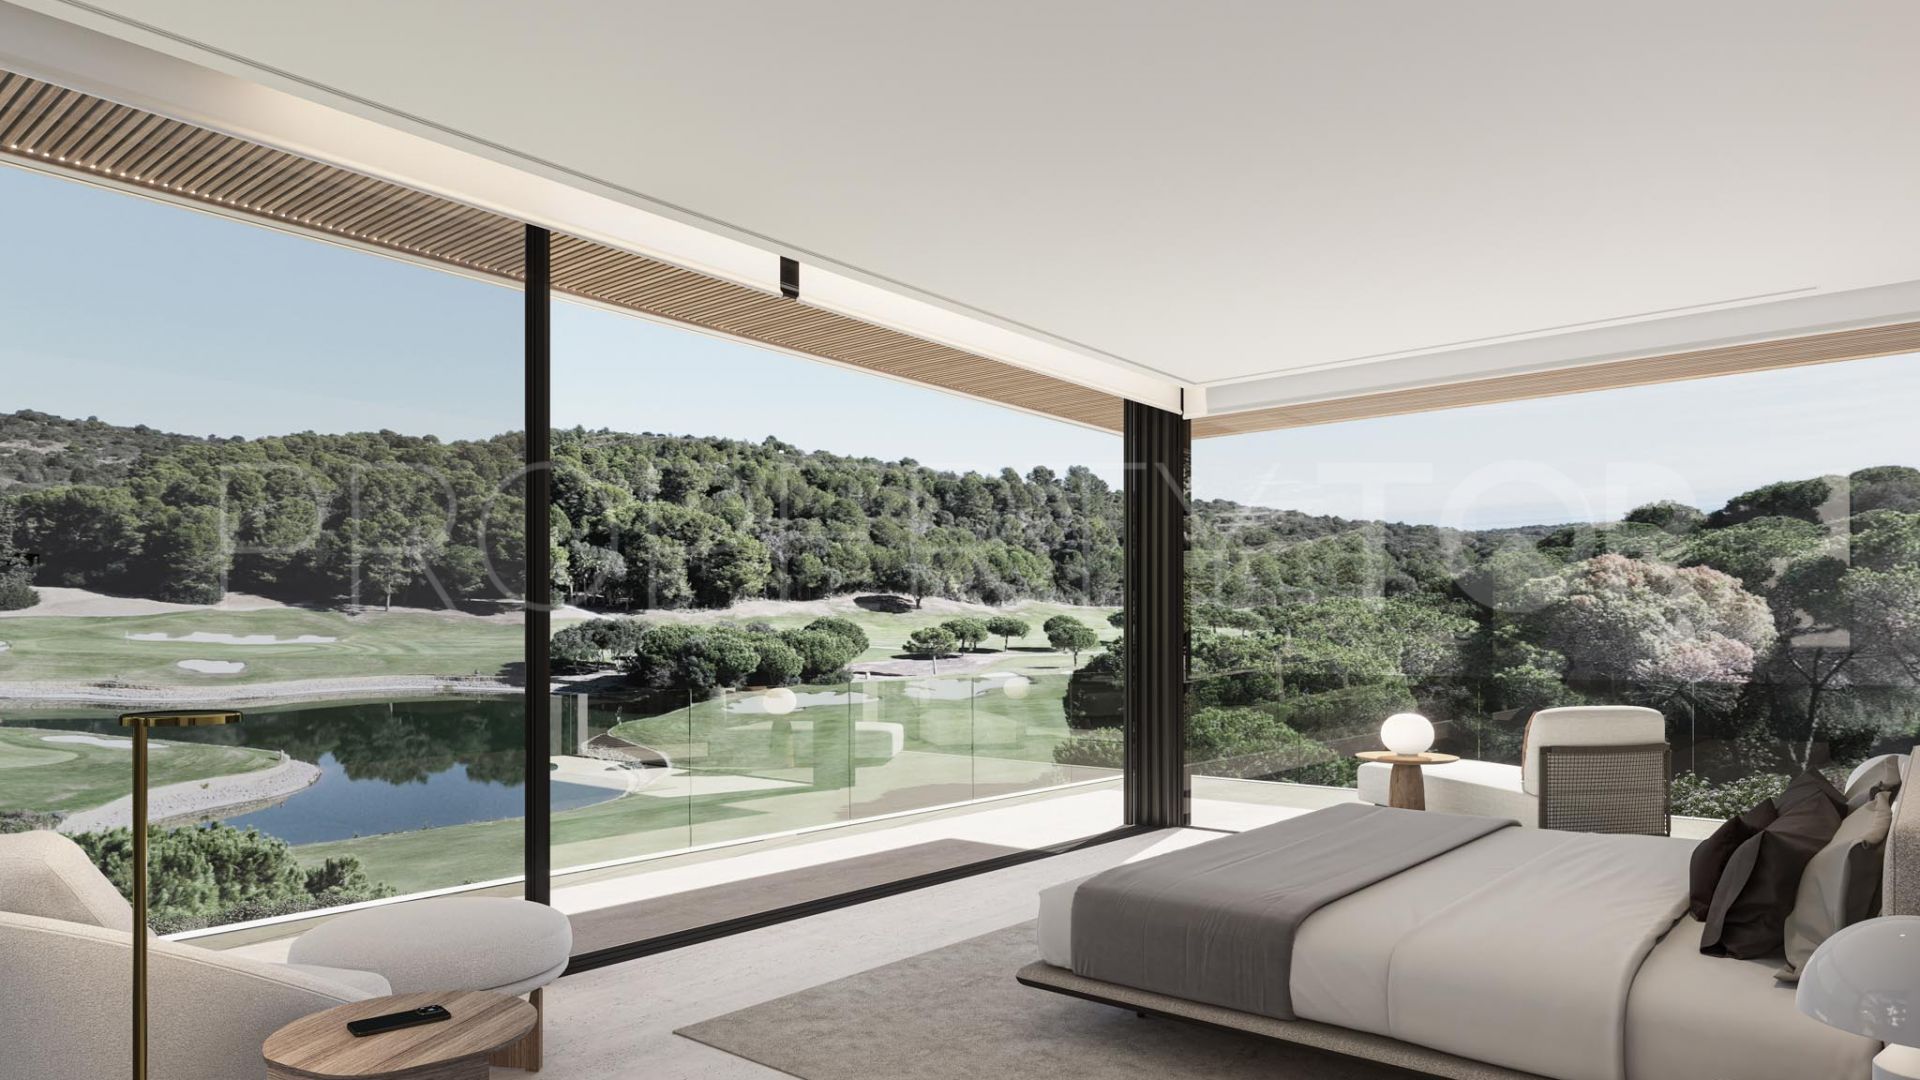 4 bedrooms villa in La Reserva for sale